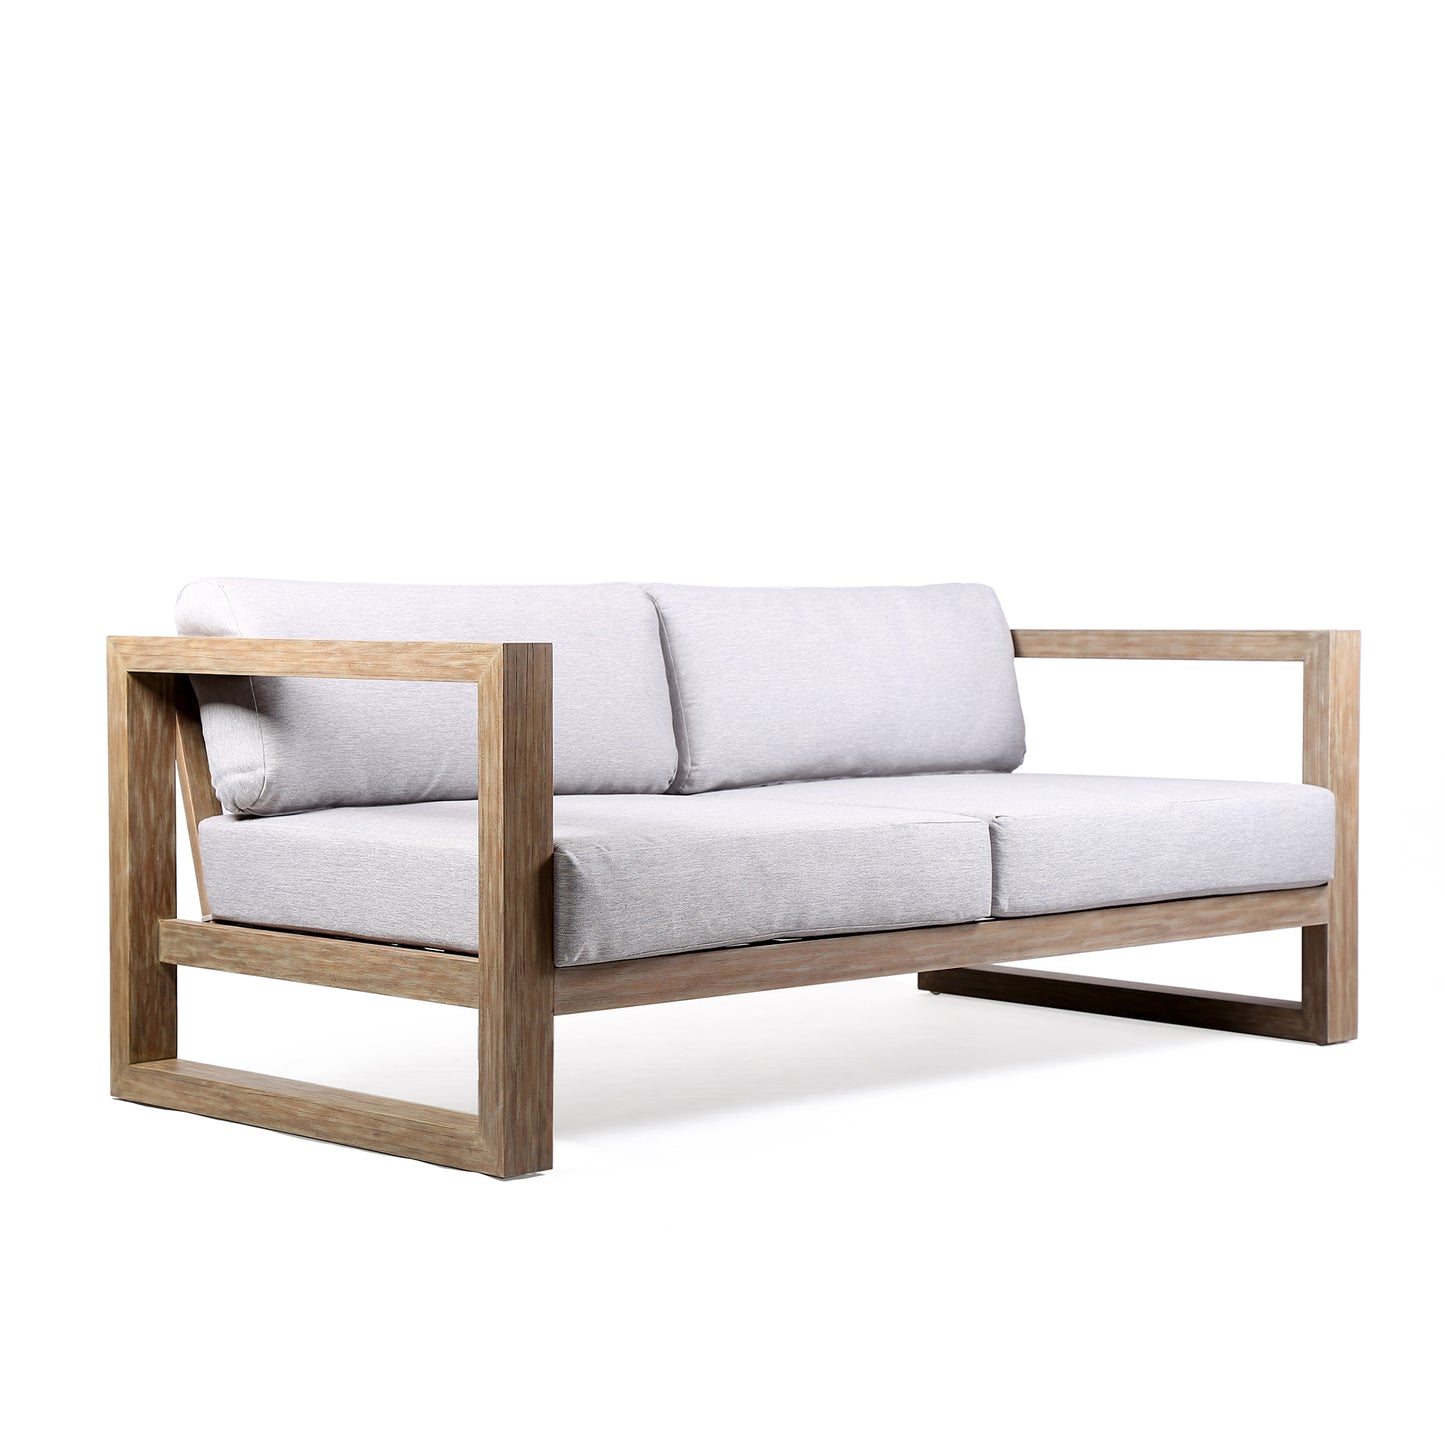 Paradise 4 Piece Outdoor Light Eucalyptus Wood Sofa Seating Set with Gray Cushions